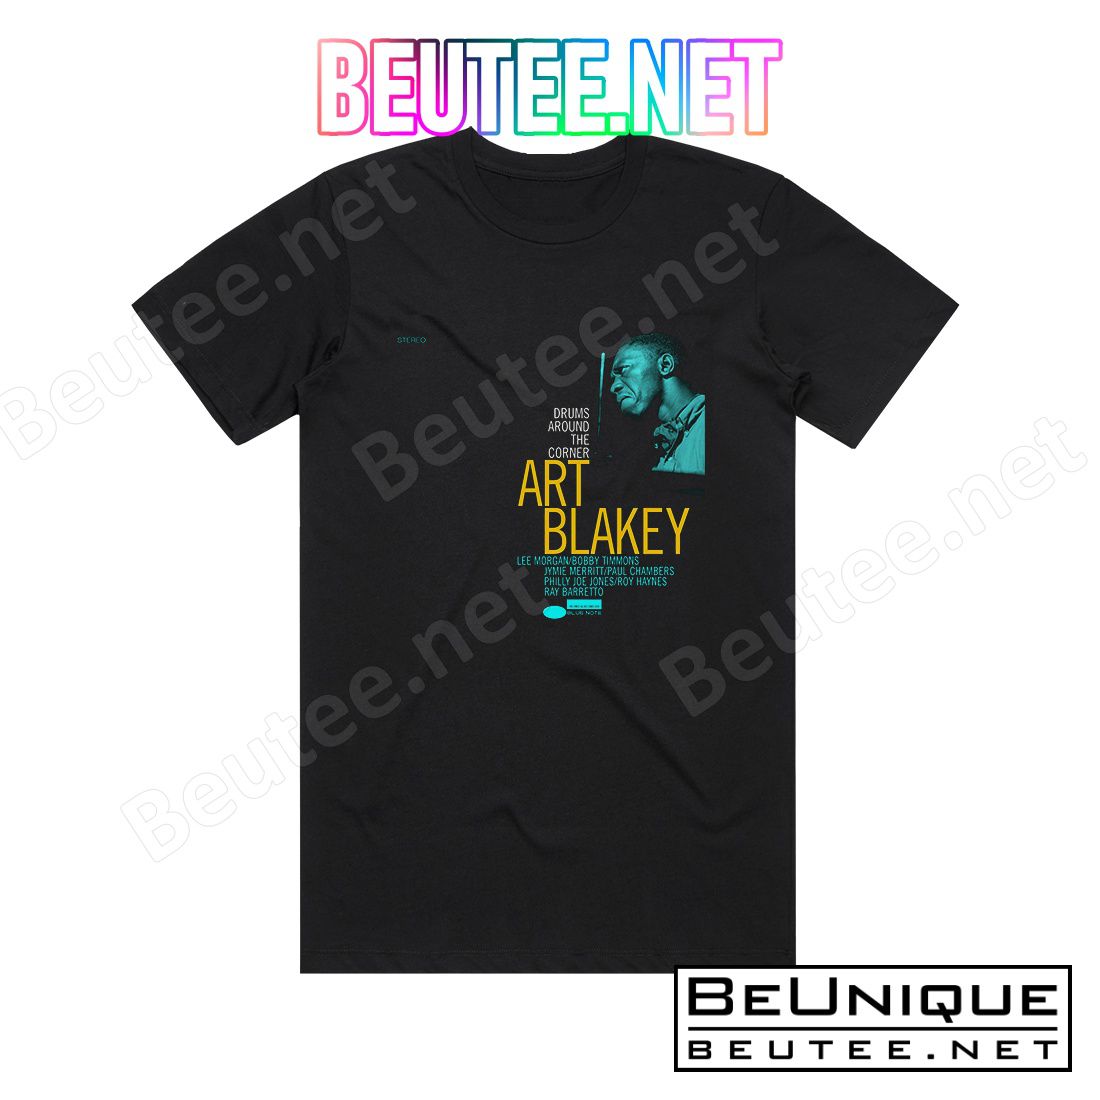 Art Blakey Drums Around The Corner Album Cover T-Shirt